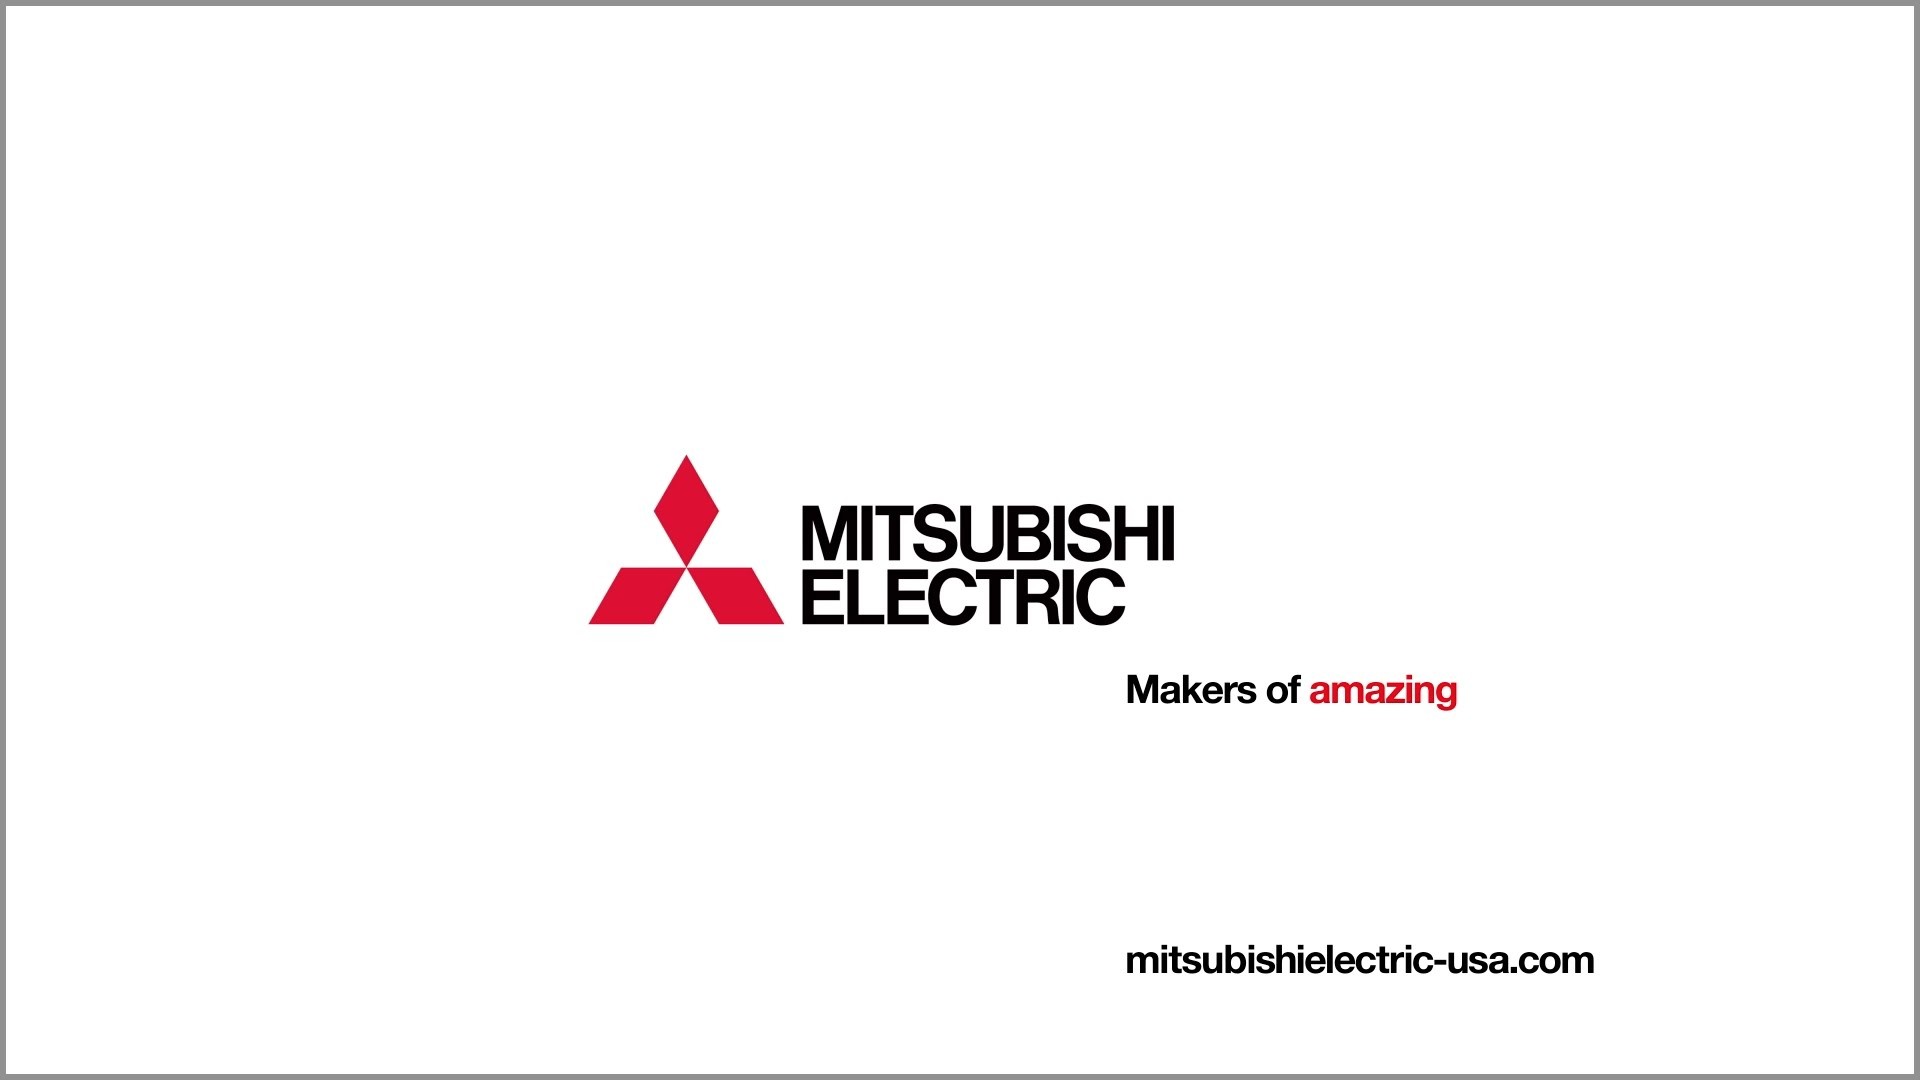 1920x1080 Mitsubishi electric logo - Mitsubishi Electric Makers Of Amazing U S Version